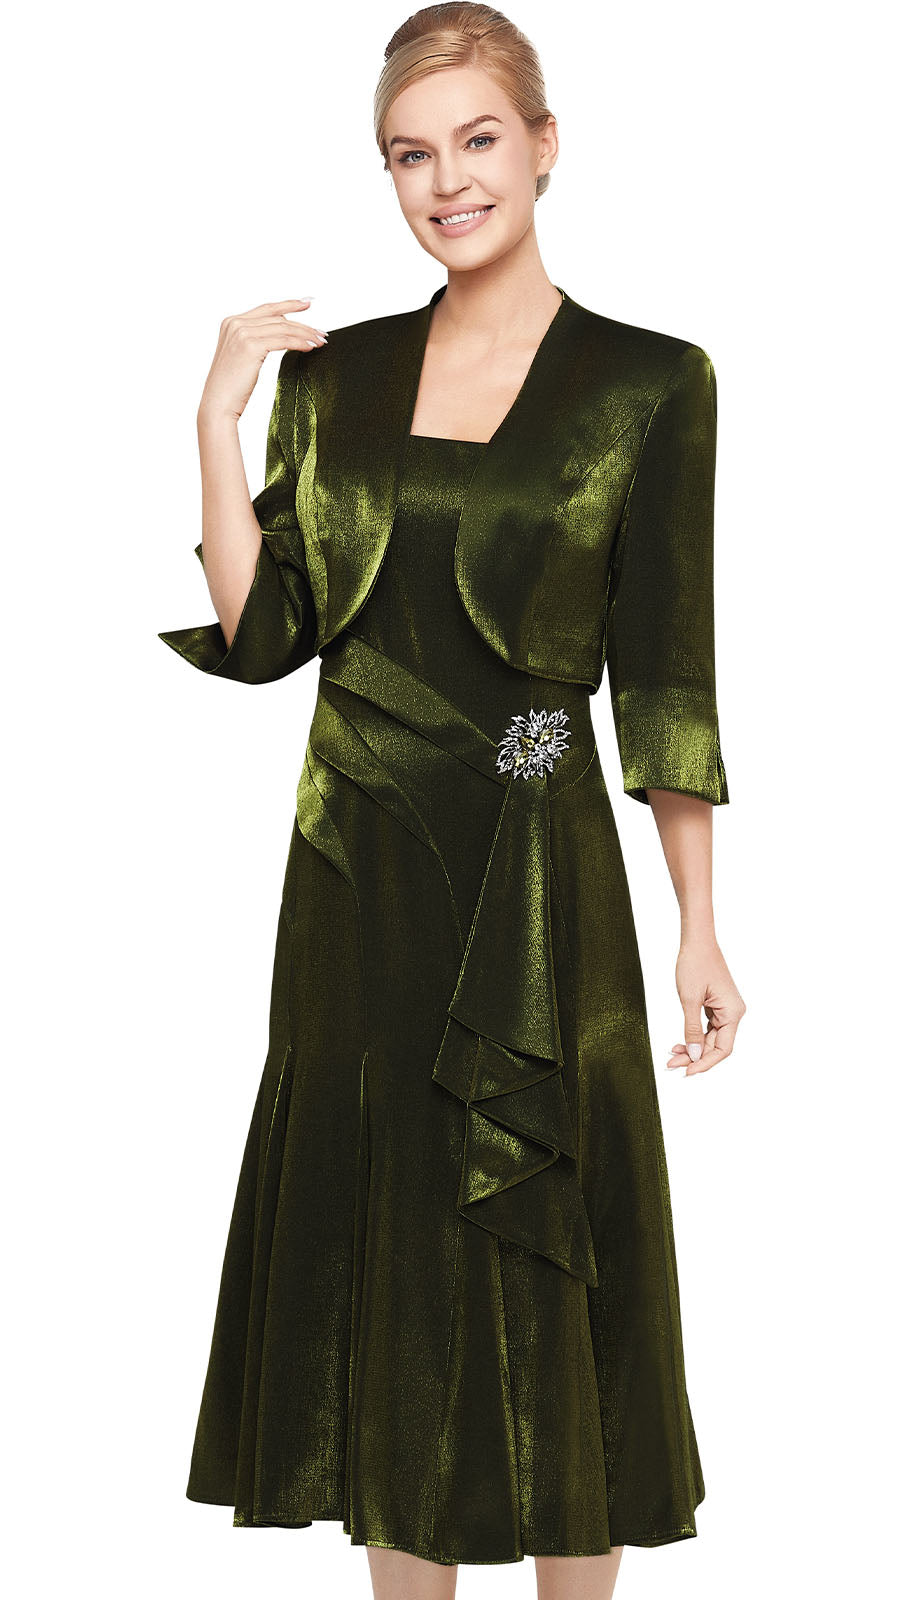 Nina Massini Church Dress 2680C-Olive - Church Suits For Less